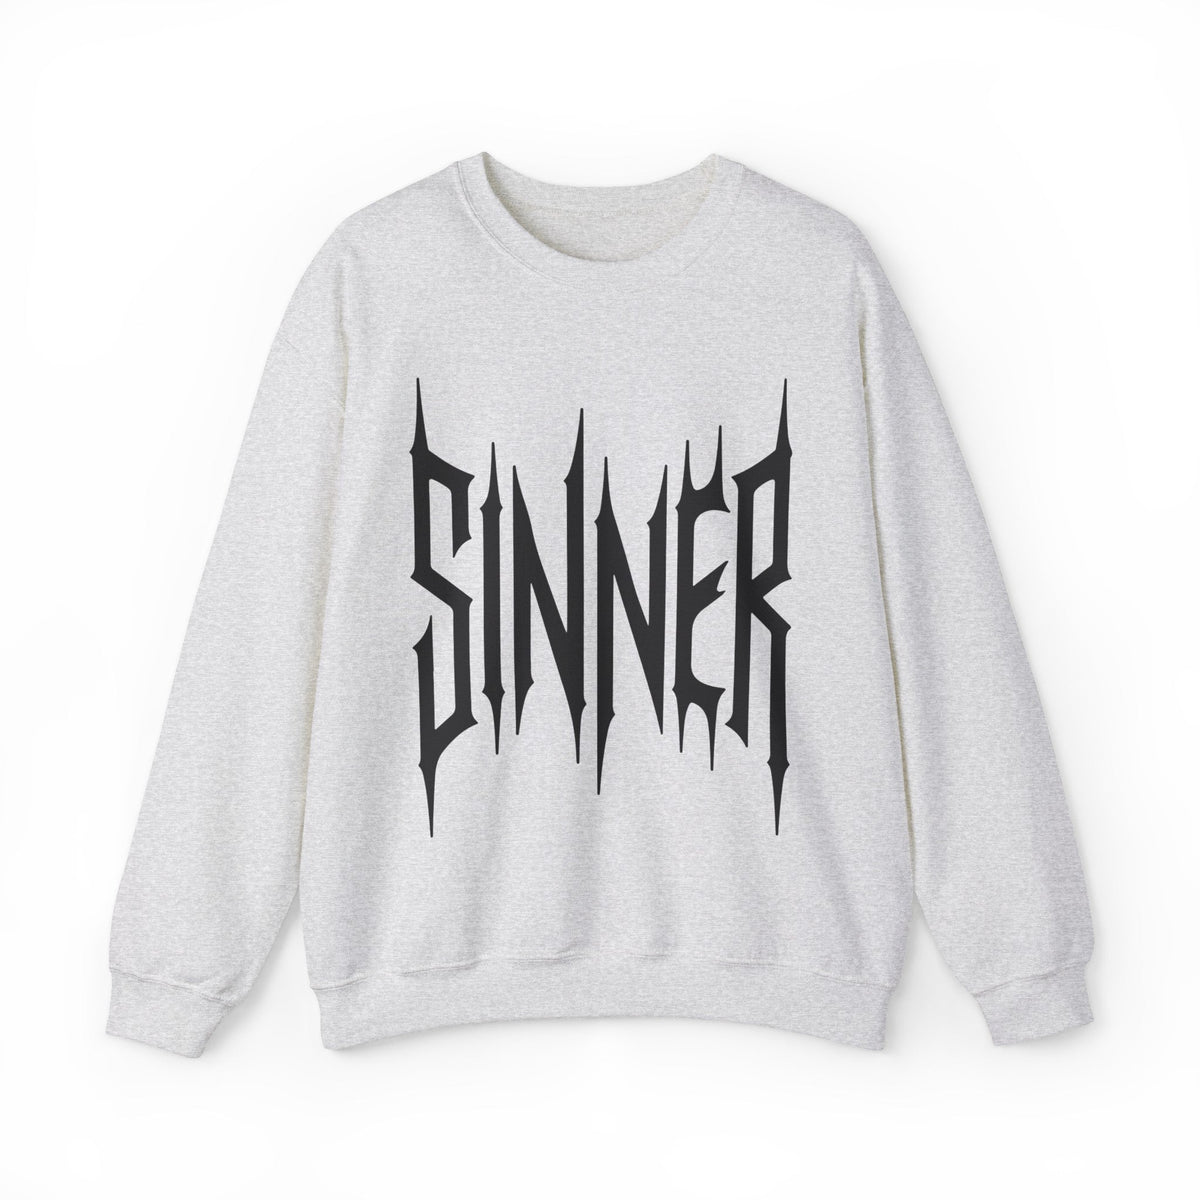 Sinner Unisex Sweatshirt - Goth Cloth Co.Sweatshirt12262225916621191170